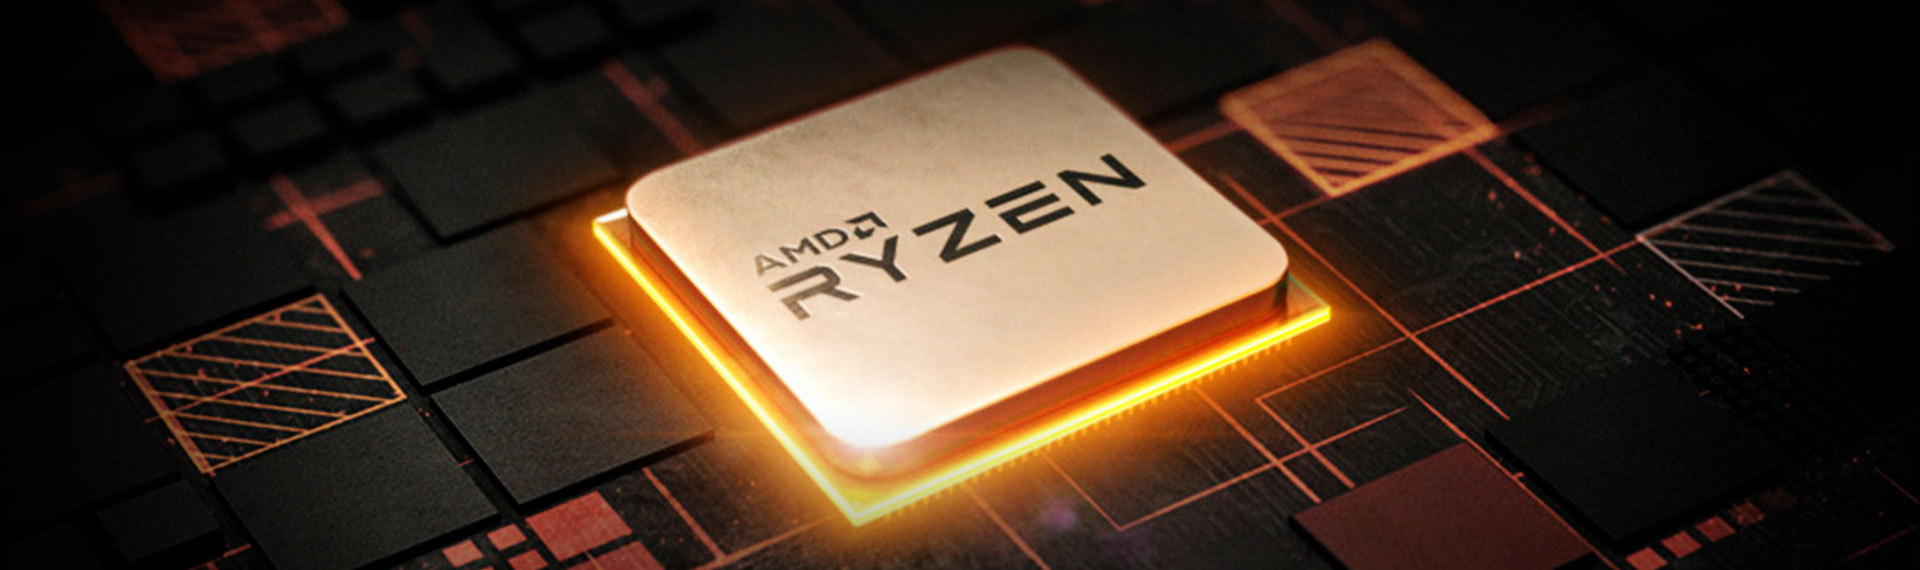 Seberapa Hebat Performa Laptop AMD Ryzen? Ini Penjelasannya!